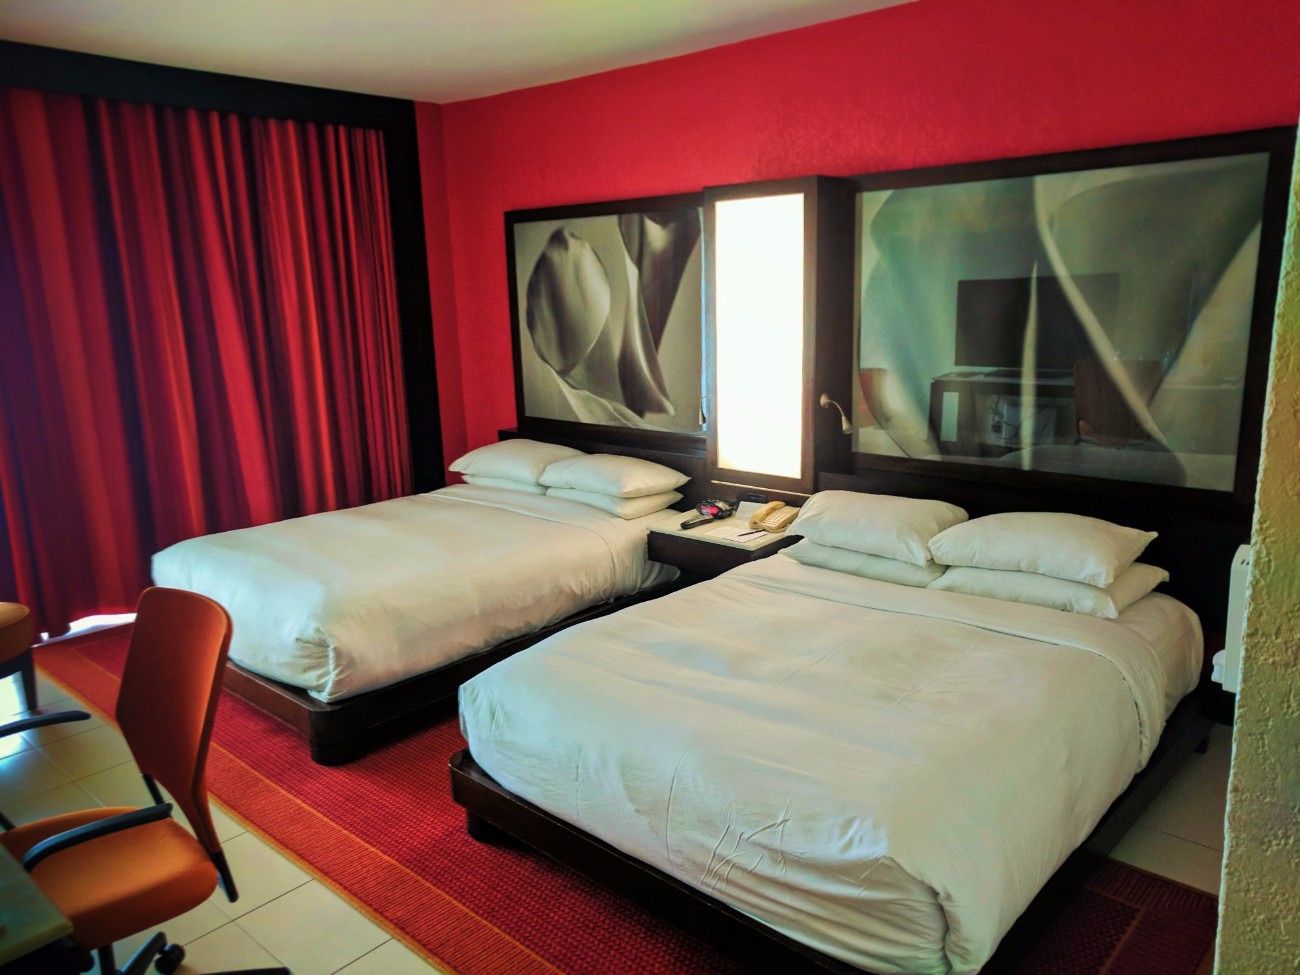 Double queen room at Condado Plaza Hilton San Juan Puerto Rico 2